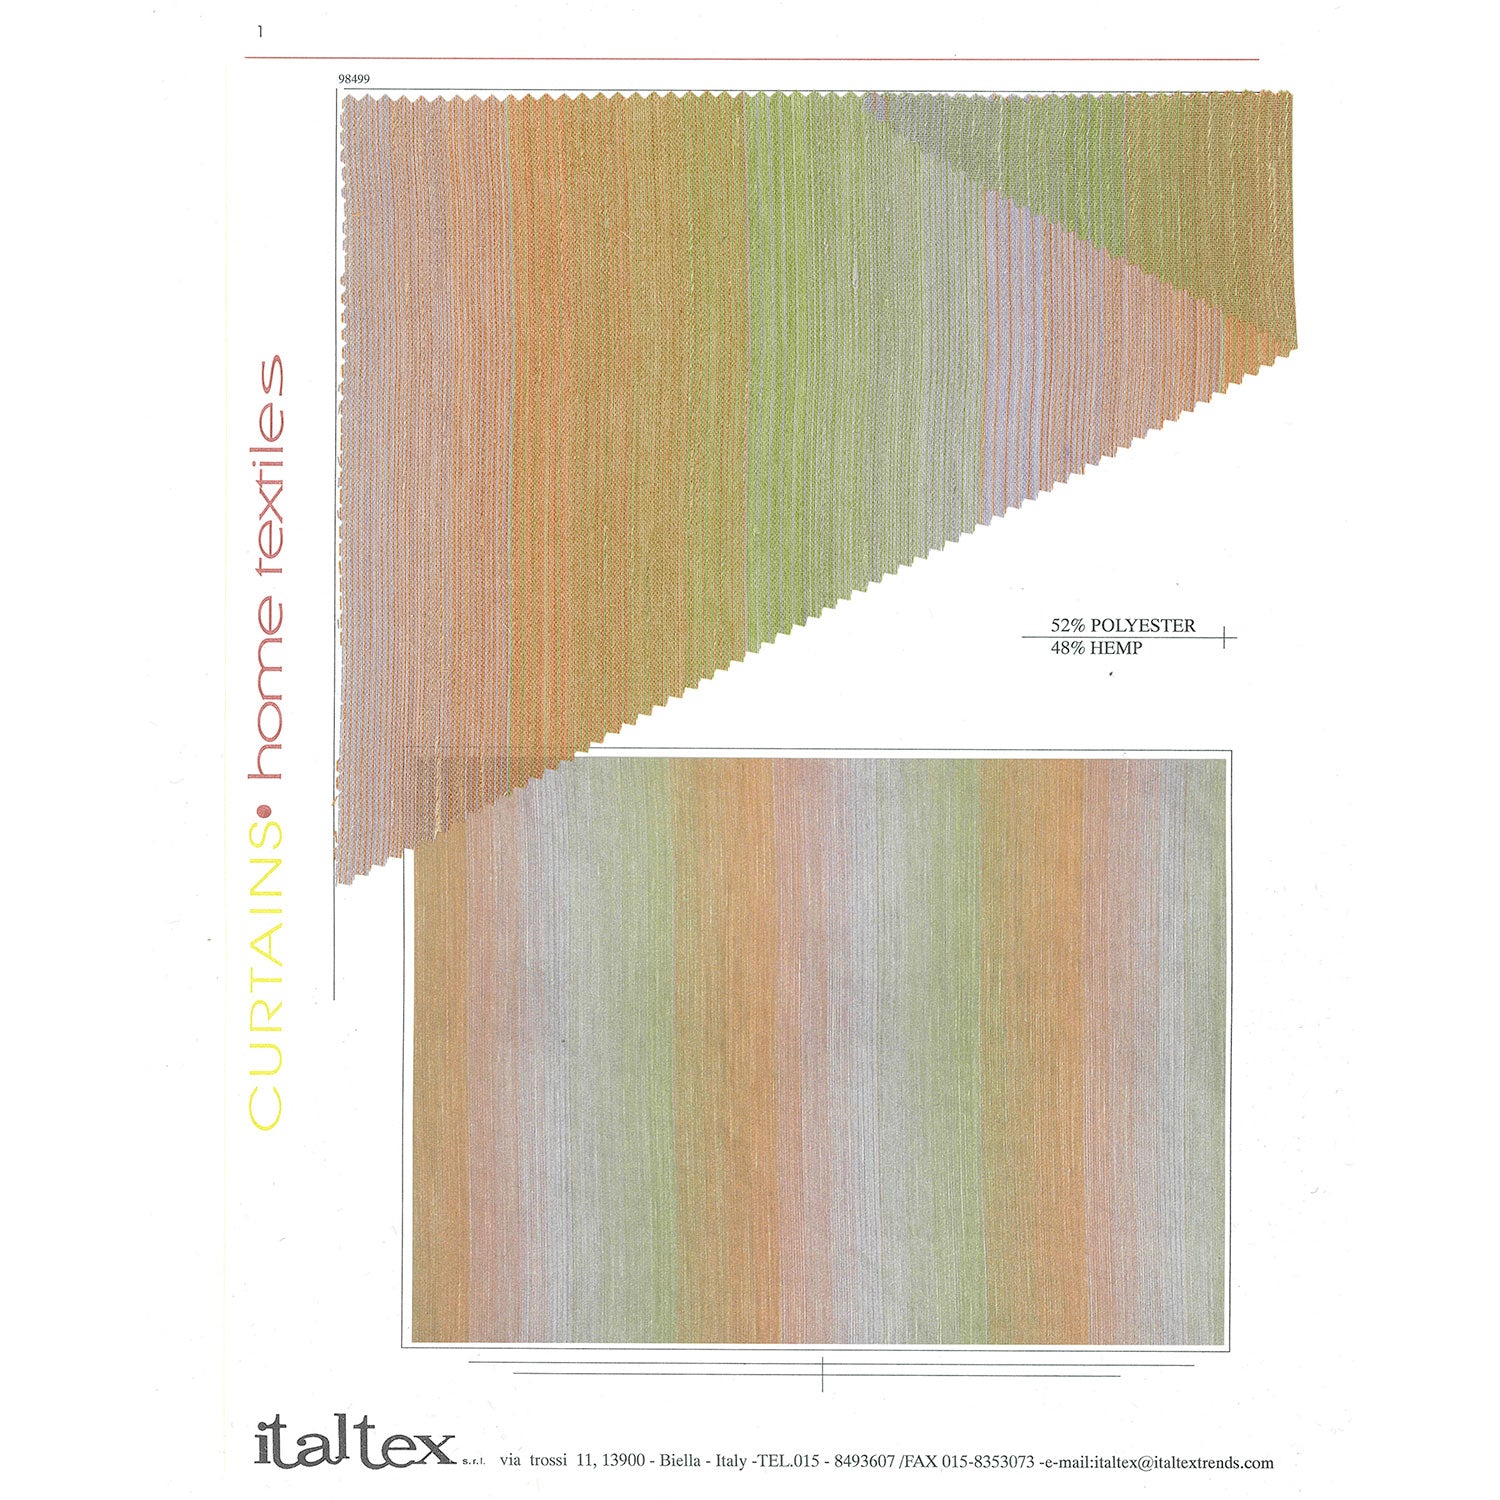 Curtains Home Textiles dal 2003 al 2007